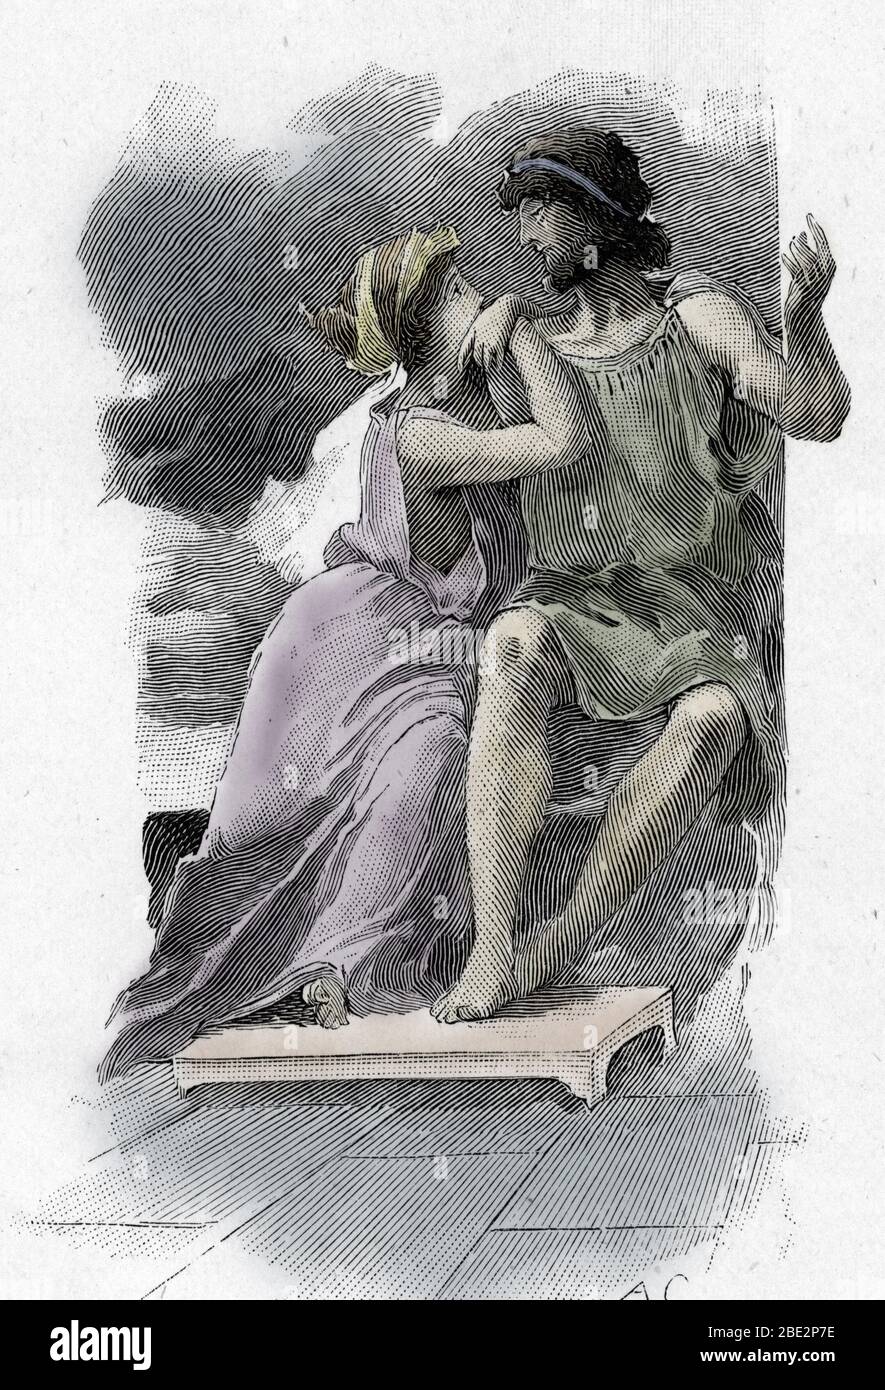 Odyssee d'Homere : Ulysse et Penelope (Odyssey by Homer : Odysseus and Penelope) Illustration d'Antoine Calbet (1860-1944) pour 'L'odyssee' du poete g Stock Photo